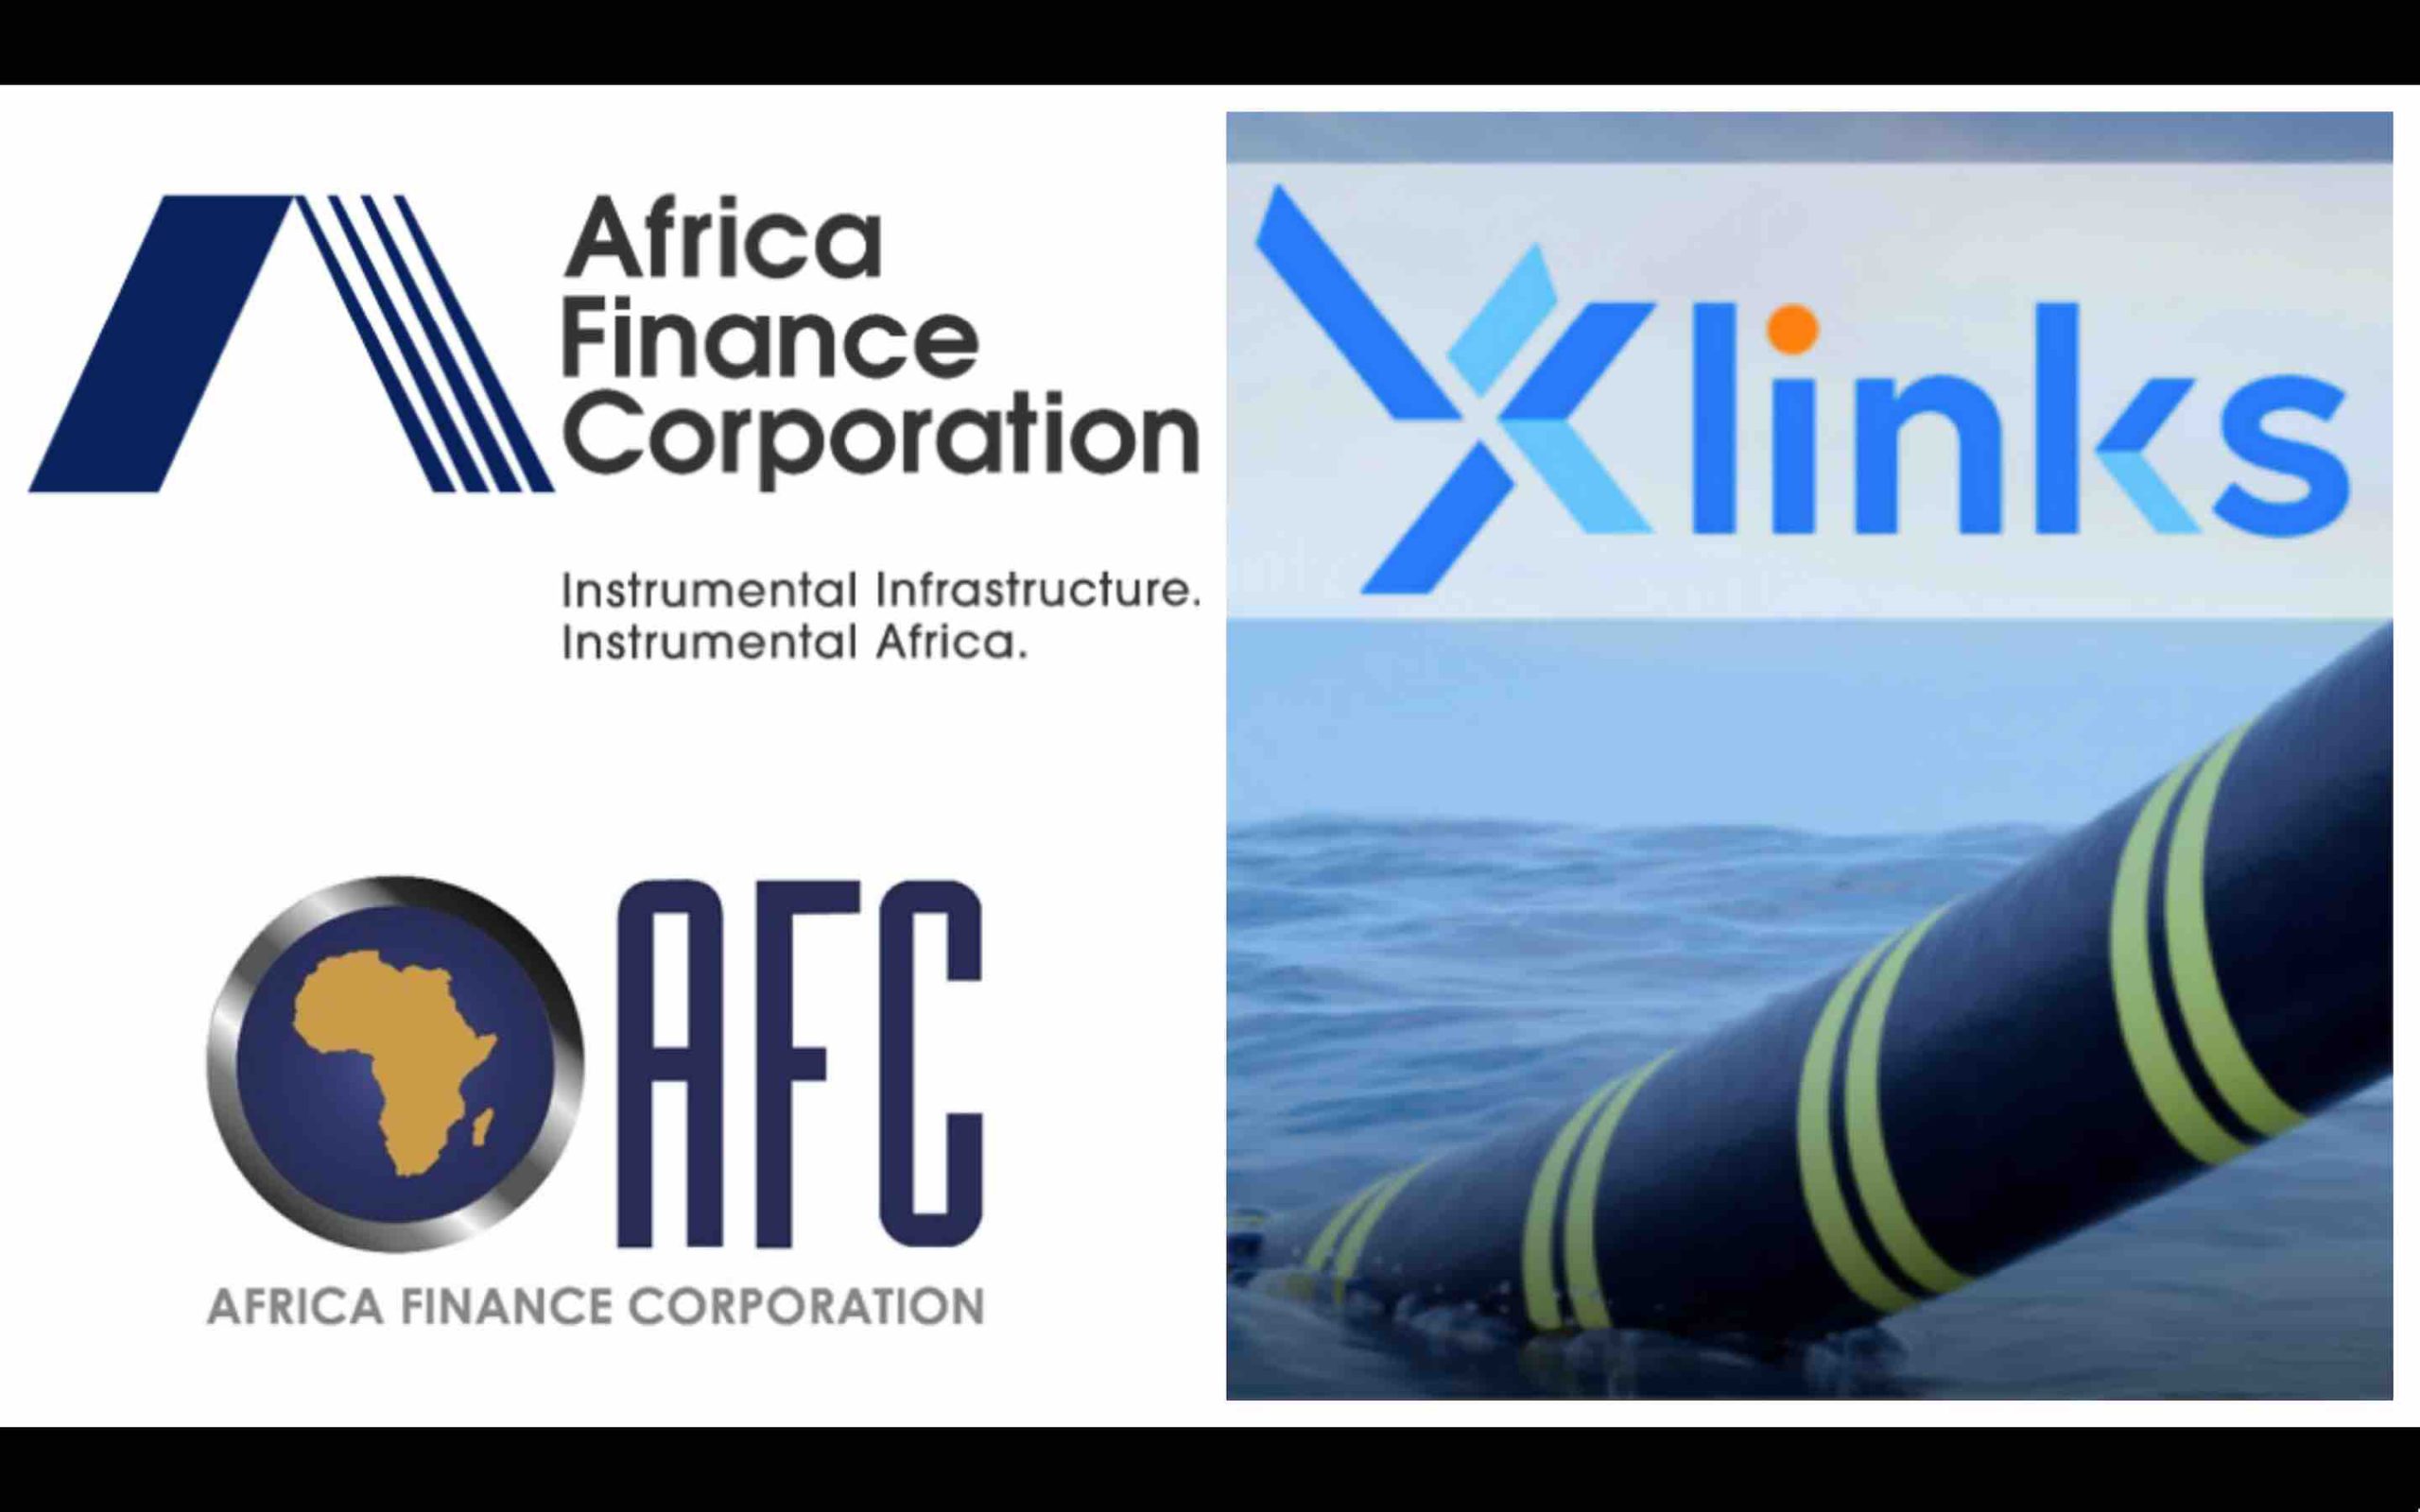 Xlinks Africa Finance Corporation AFC Maroc Morocco